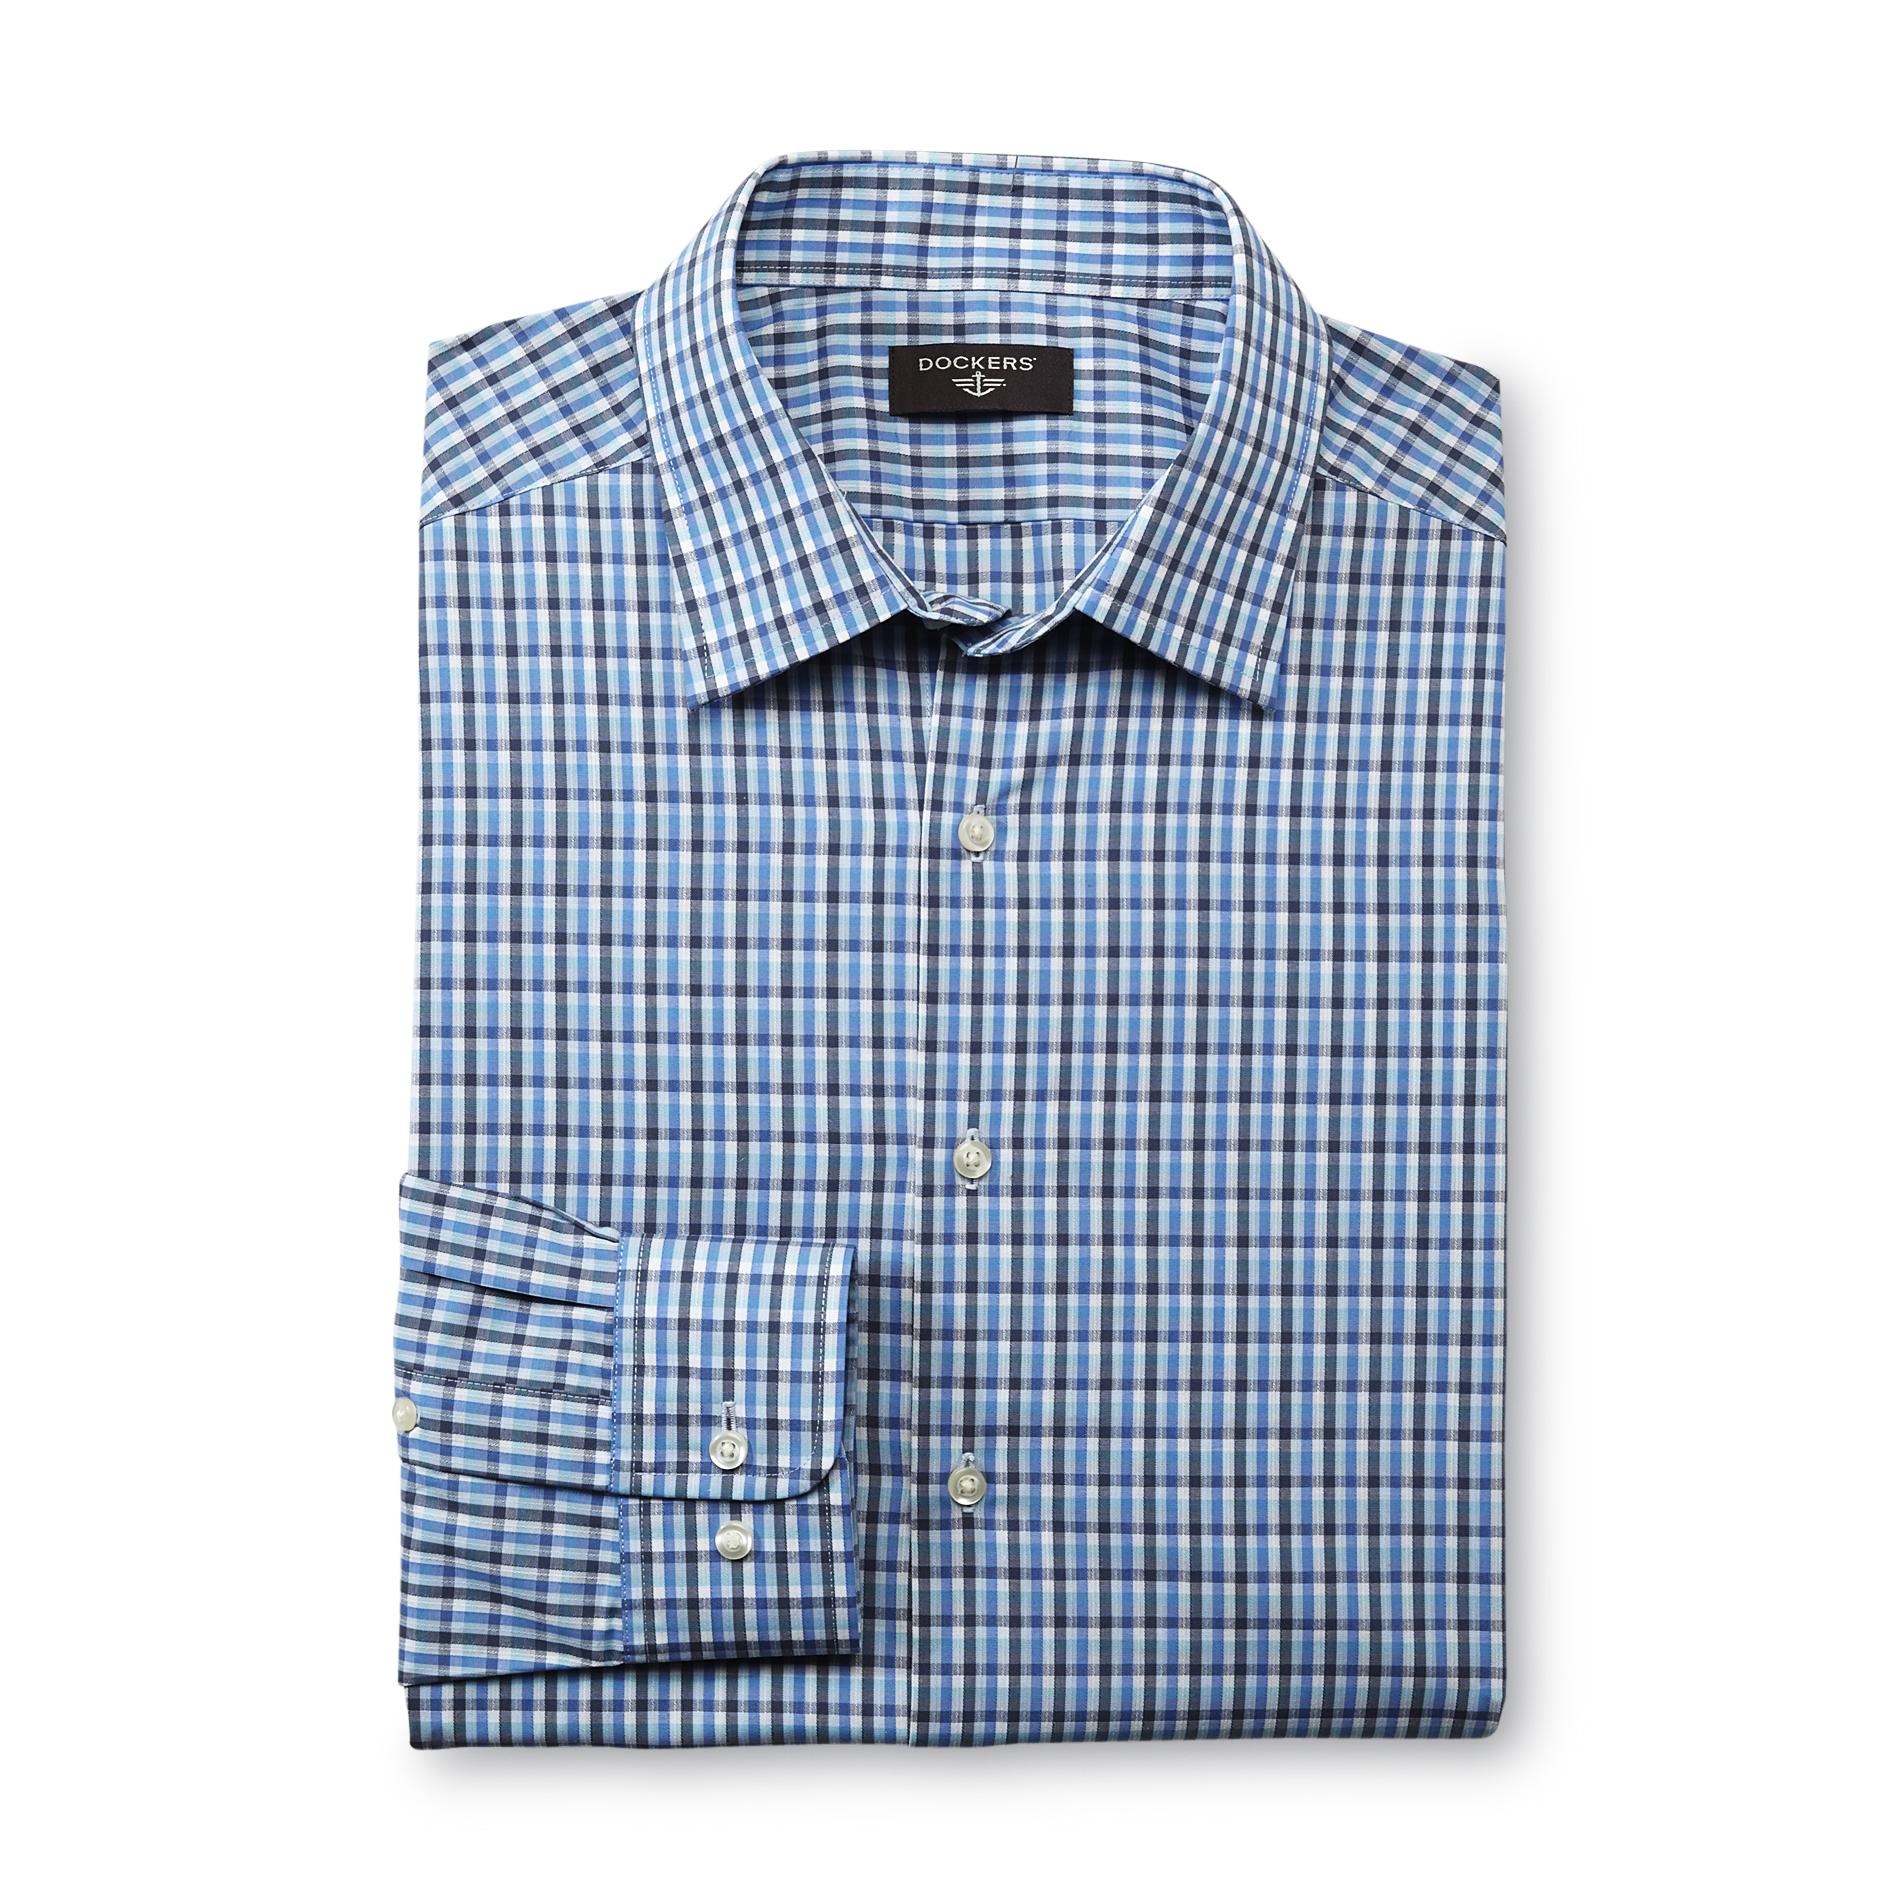 Dockers Men's Fitted Dress Shirt - Checkered